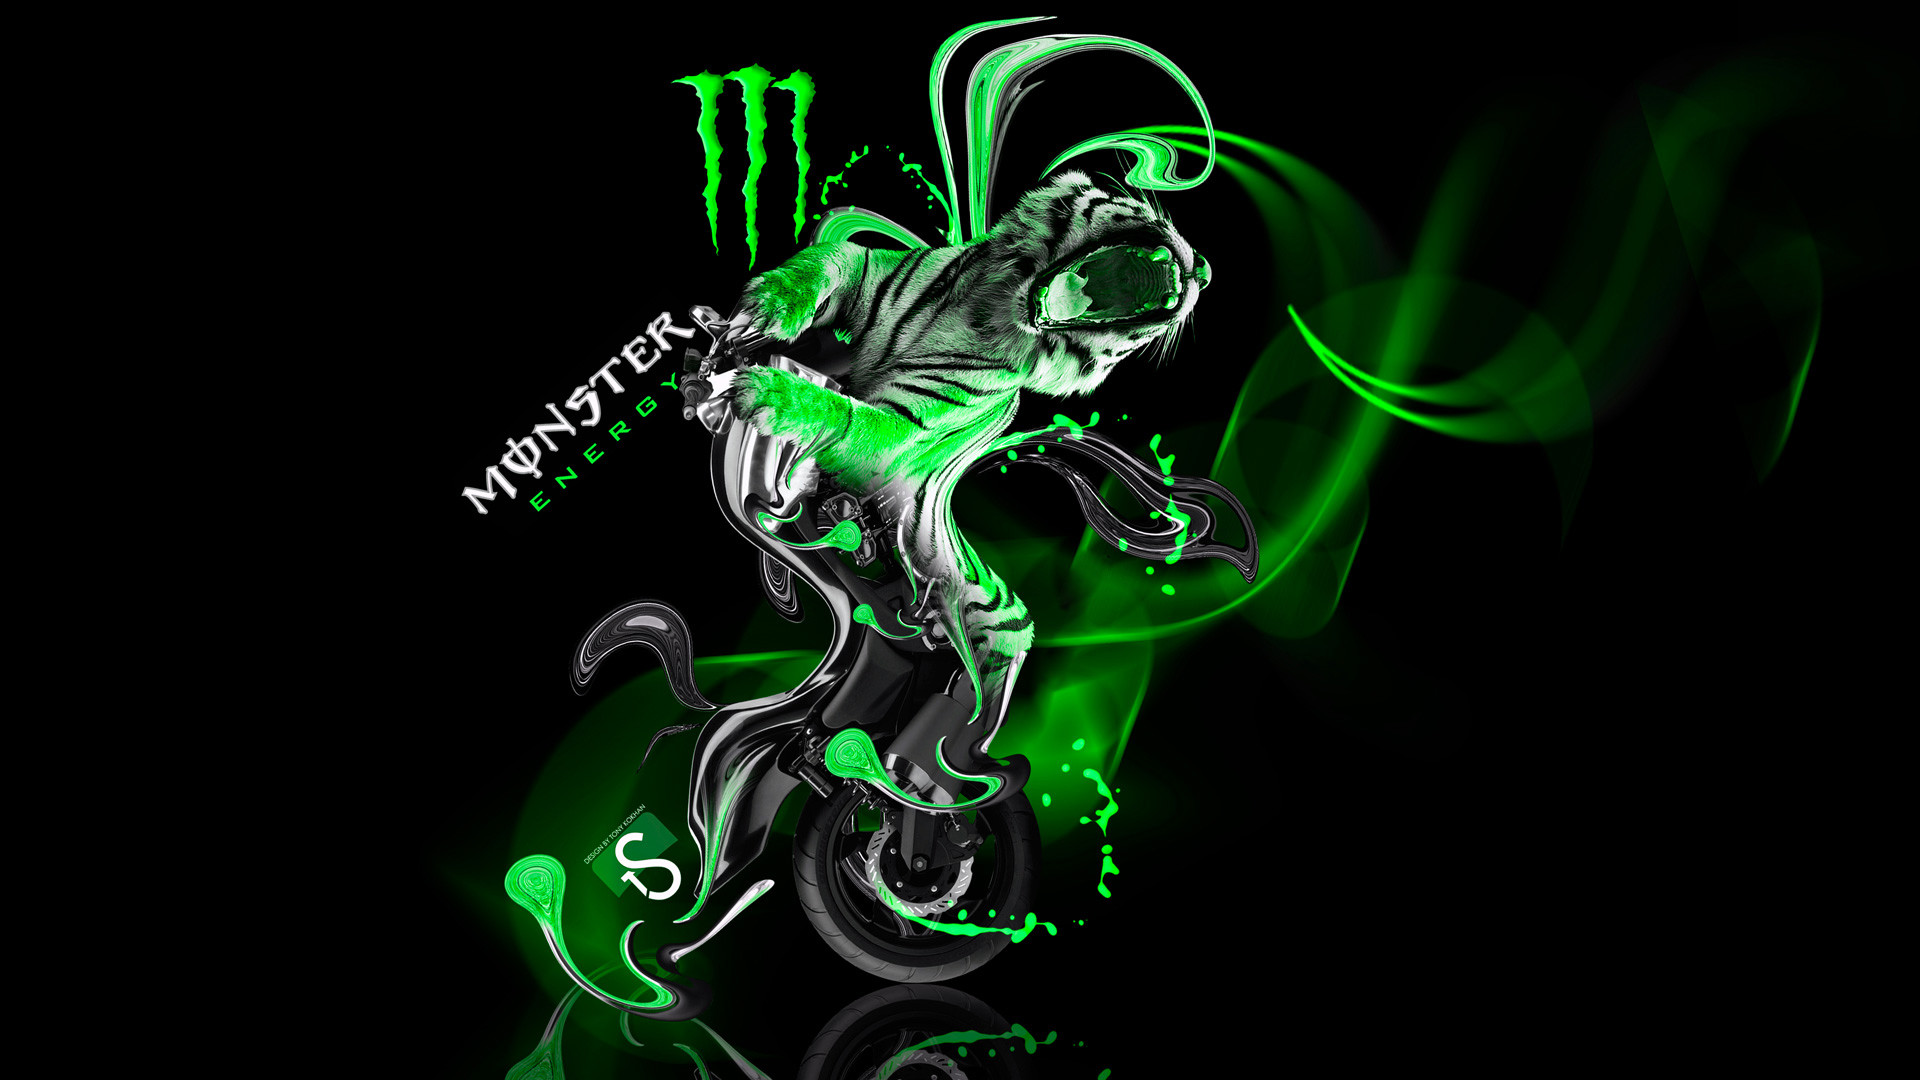 Wallpapers Monster Energy Moto Yamaha Vmax Fantasy Green Neon Plastic Tiger Bike